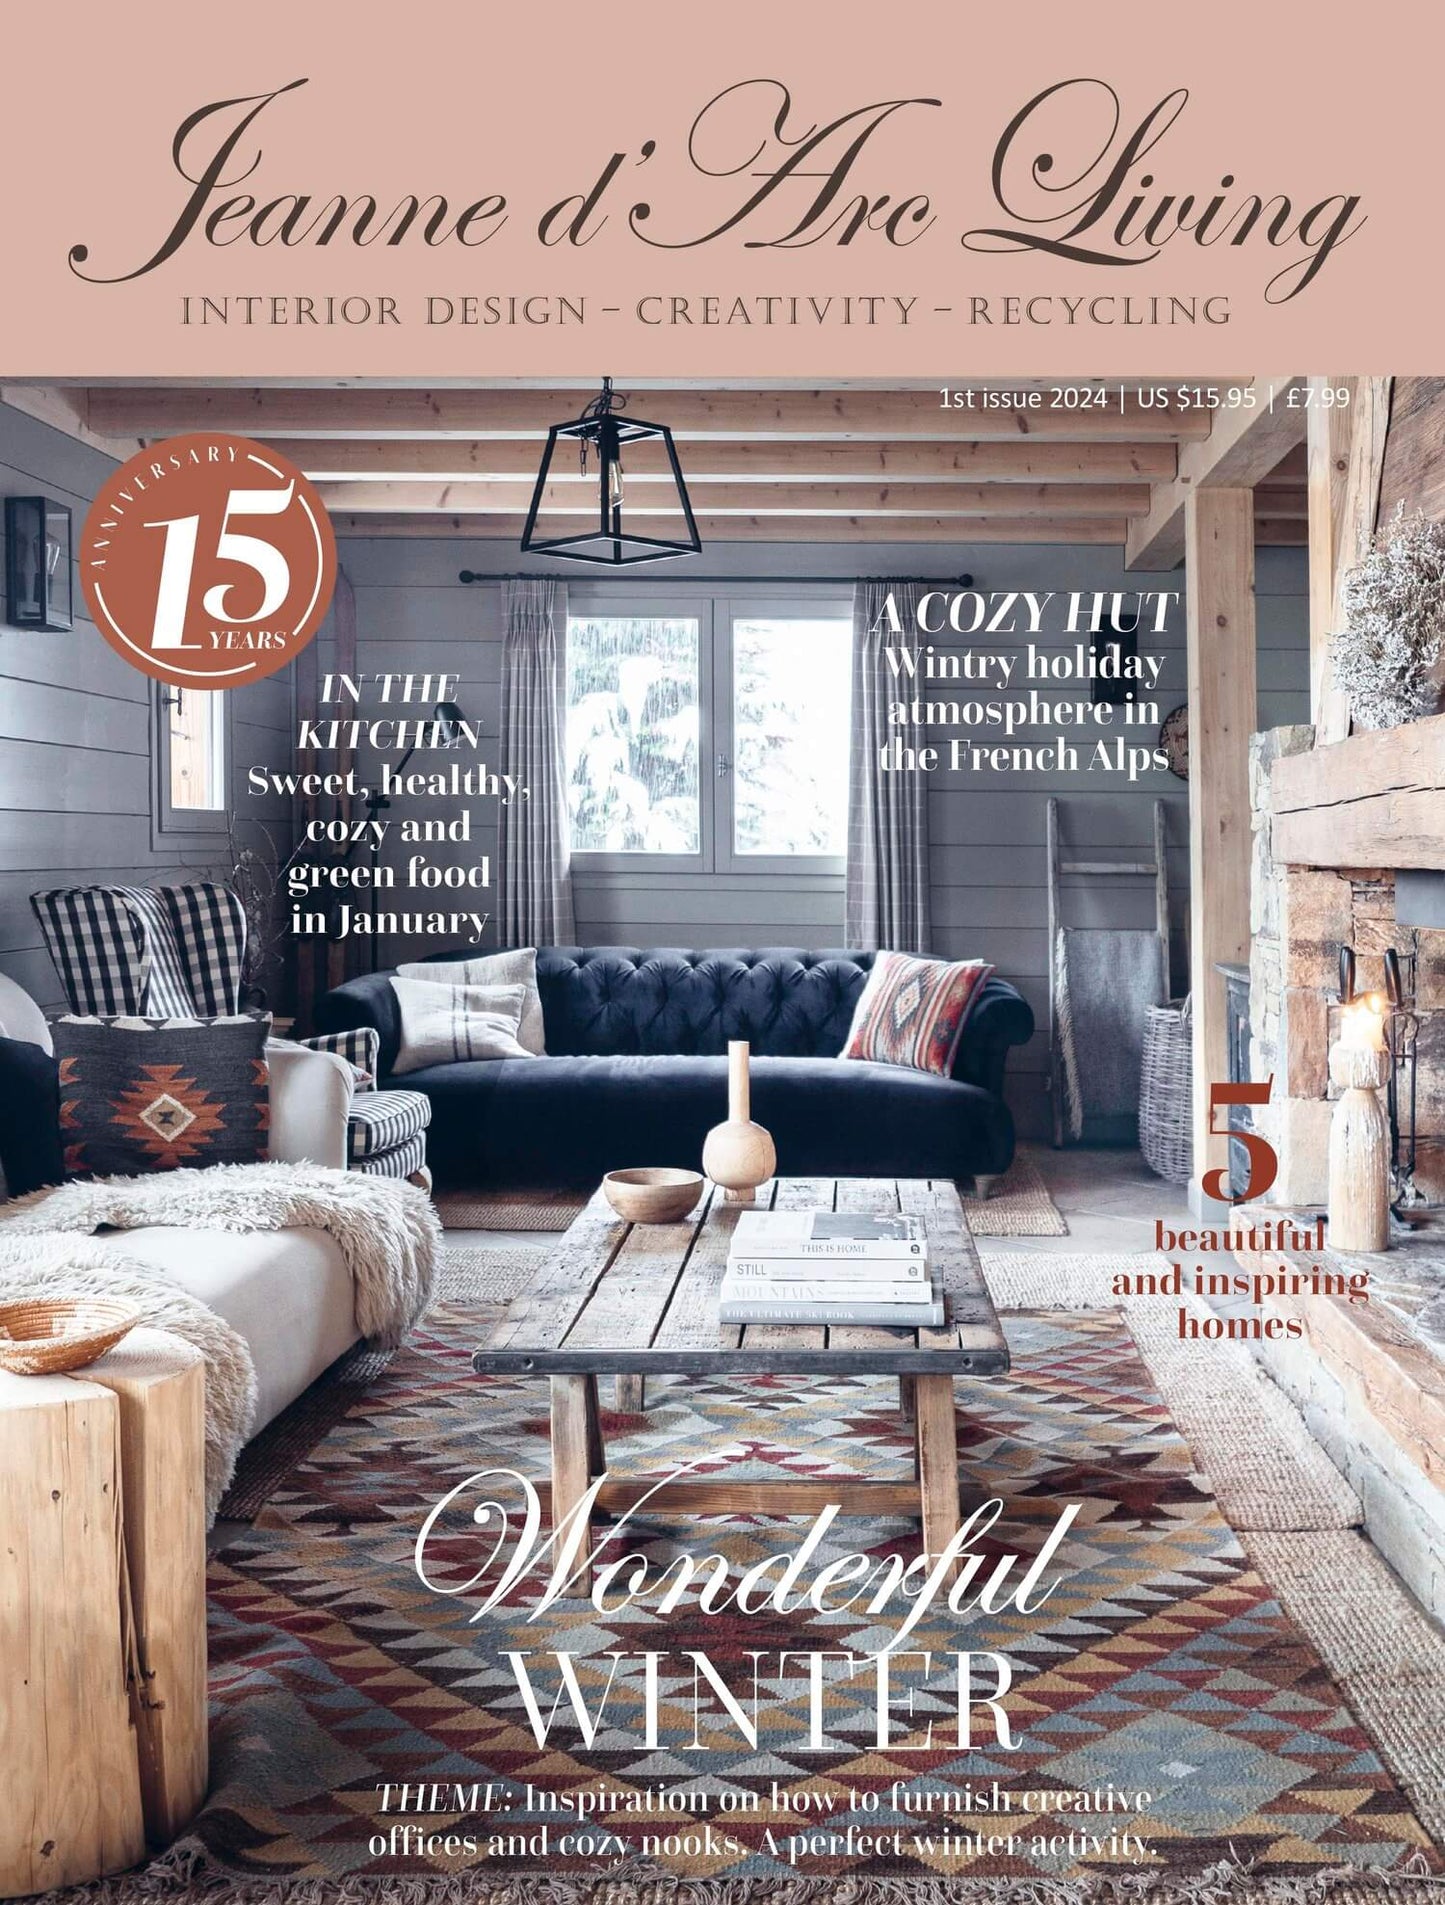 Jeanne d'Arc Living Magazine Issue 1 2024 - Blake & Taylor Chalk Furniture Paint